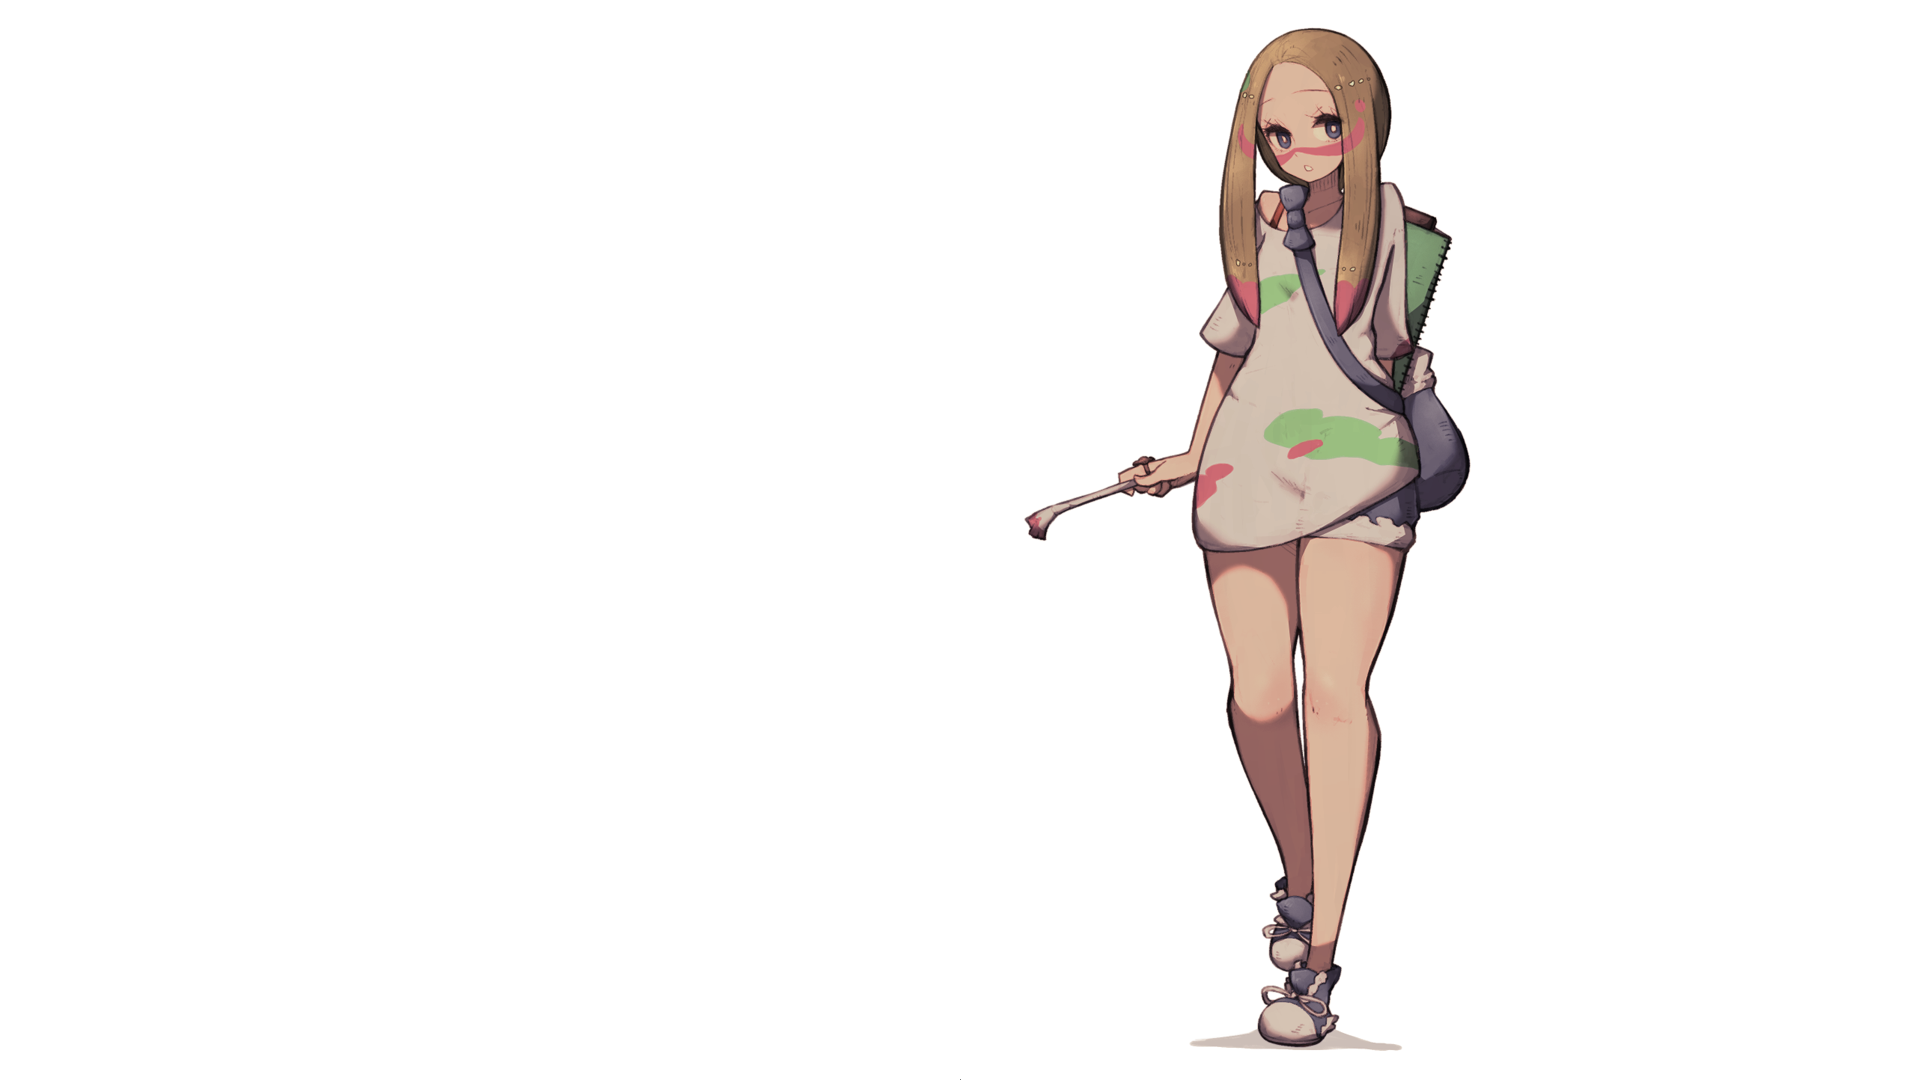 Anime 1920x1080 anime anime girls simple background Pokémon Pokémon Sun and Moon thighs thigh-highs shorts short shorts blonde LambOic029